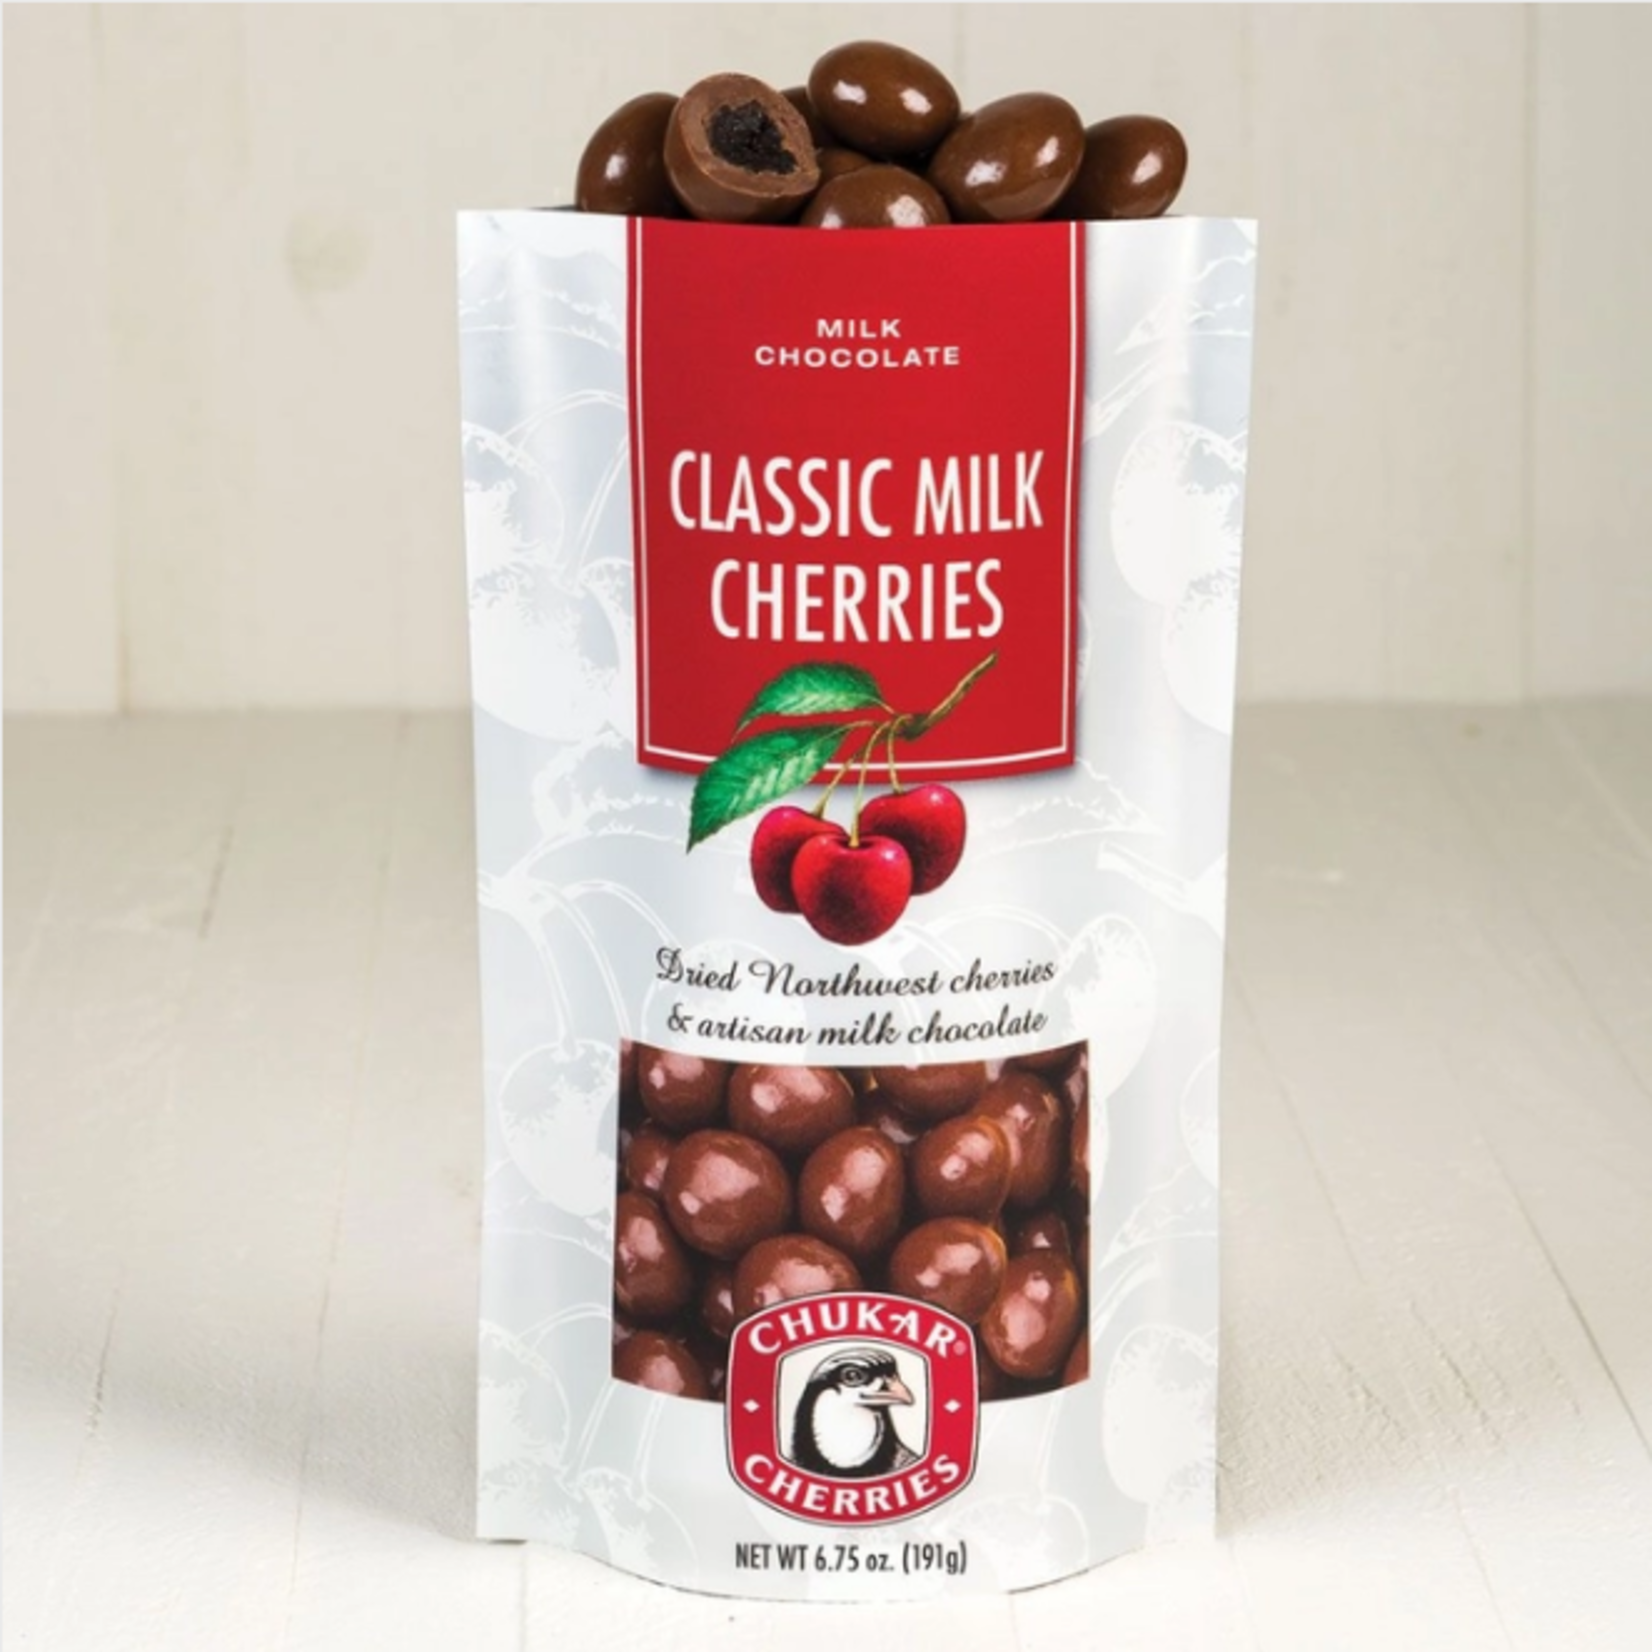 Chukar Cherry Company Classic Milk Choc Cherries 6.75oz